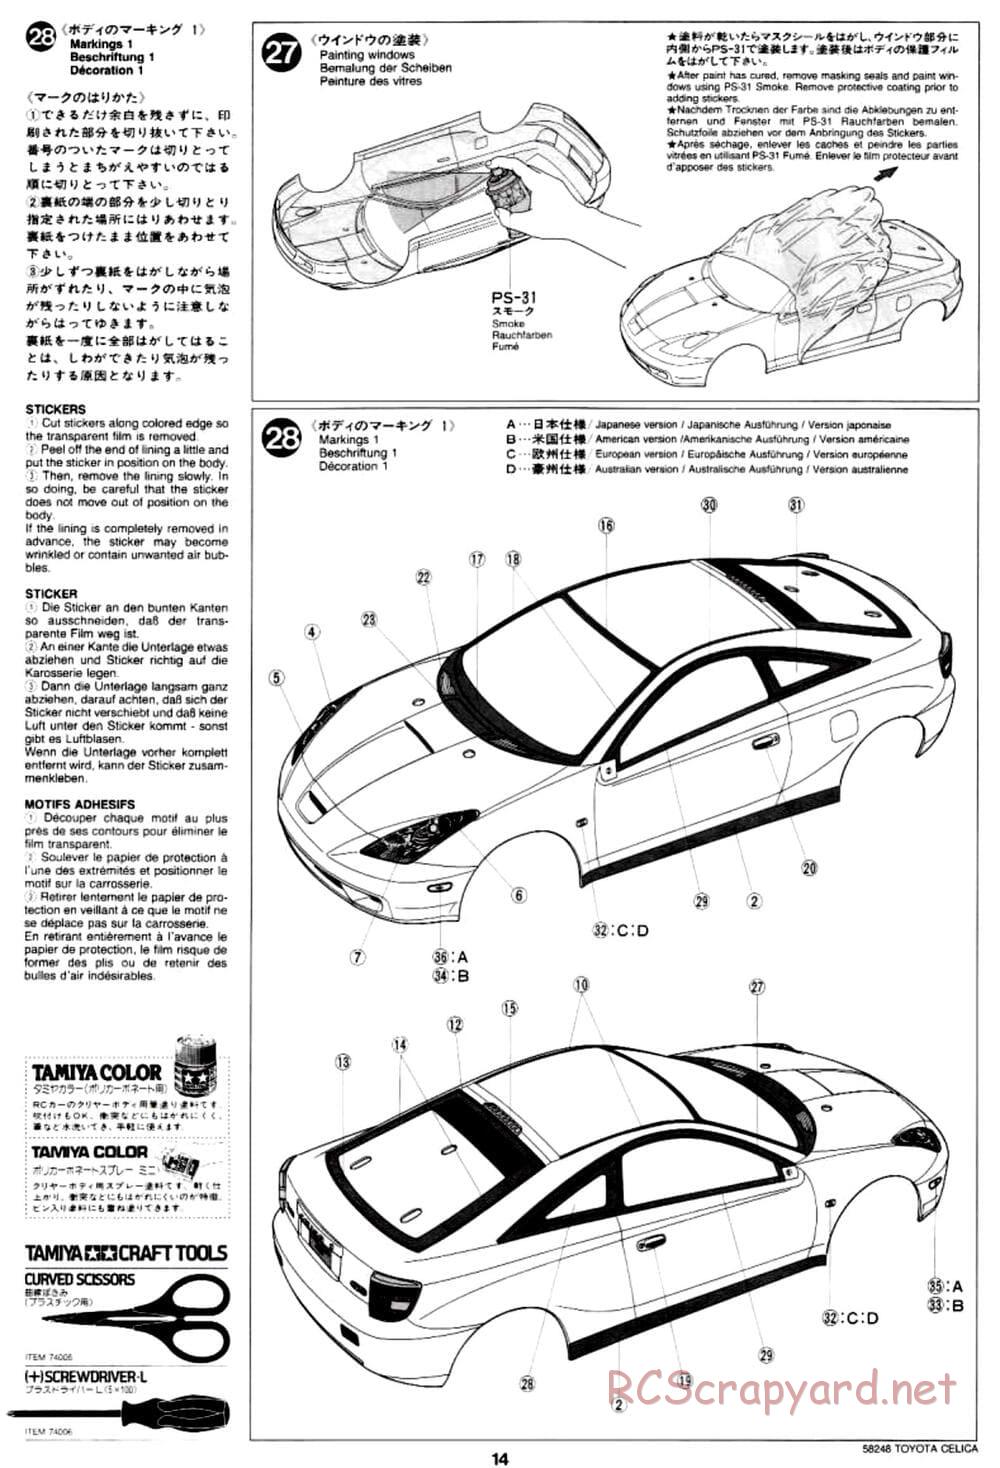 Tamiya - Toyota Celica - FF-02 Chassis - Manual - Page 14